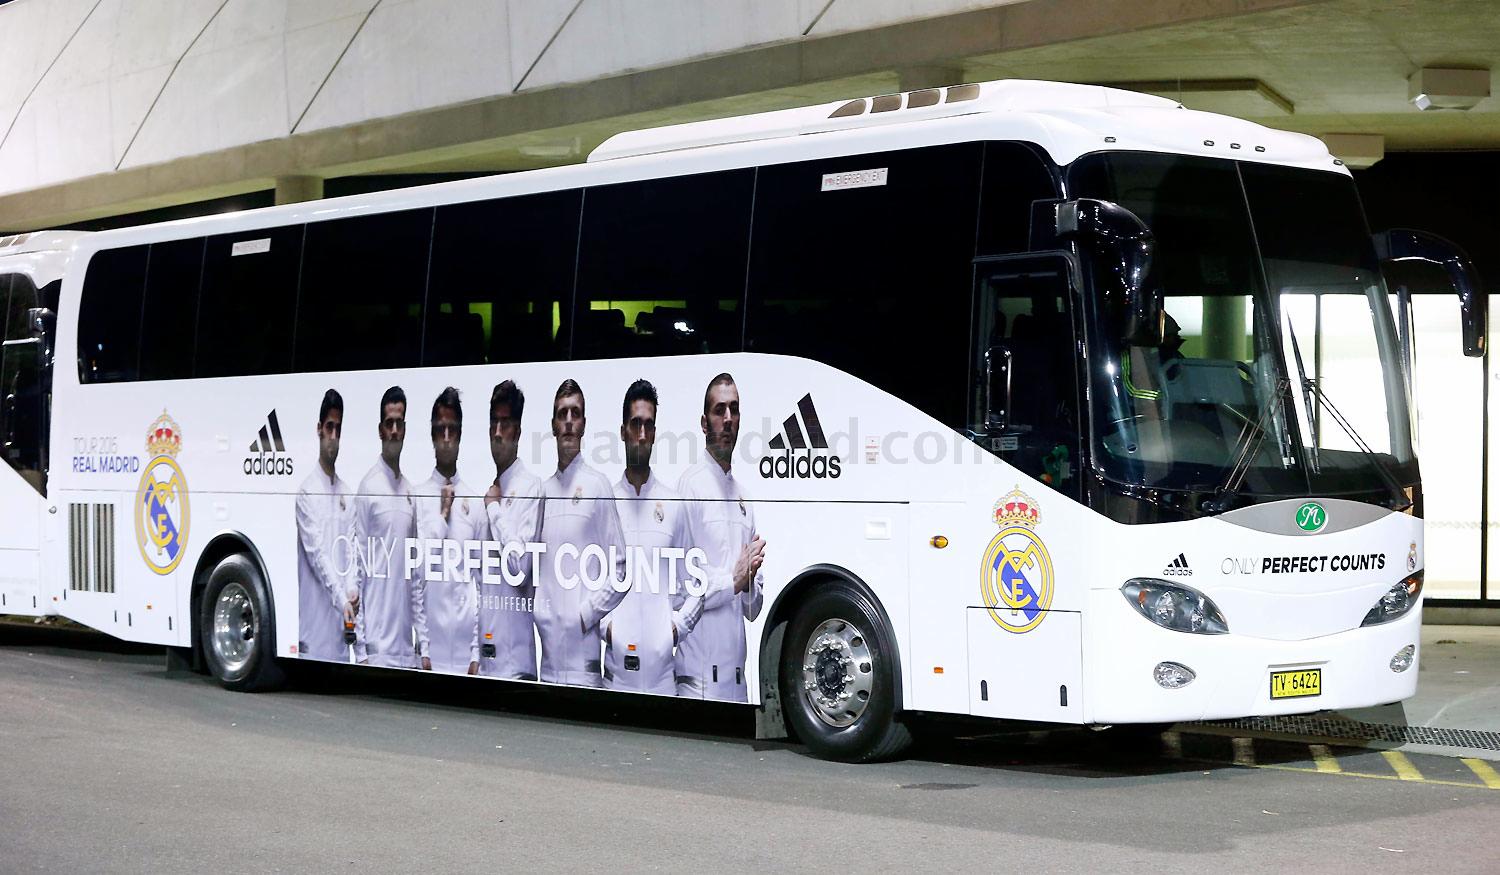 اتوبوس زیبا و مدرن رئال مادرید در تور پیش فصل 2015 (عکس)